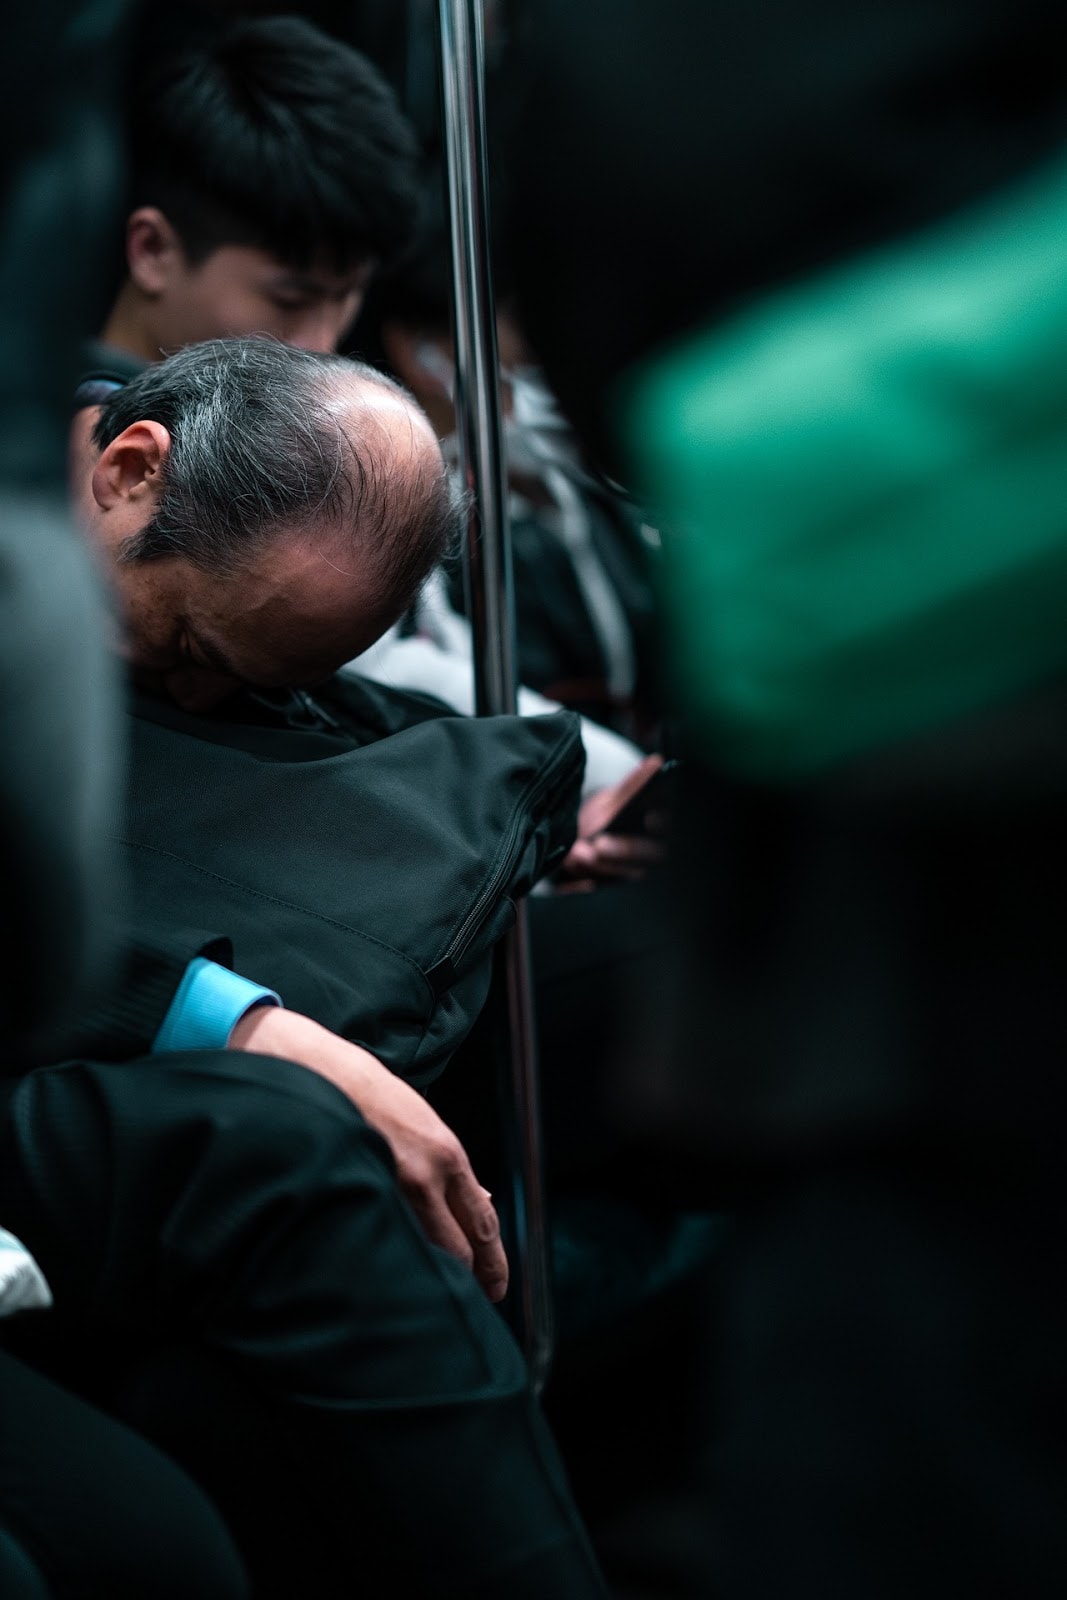 man sleeping sitting up on subway